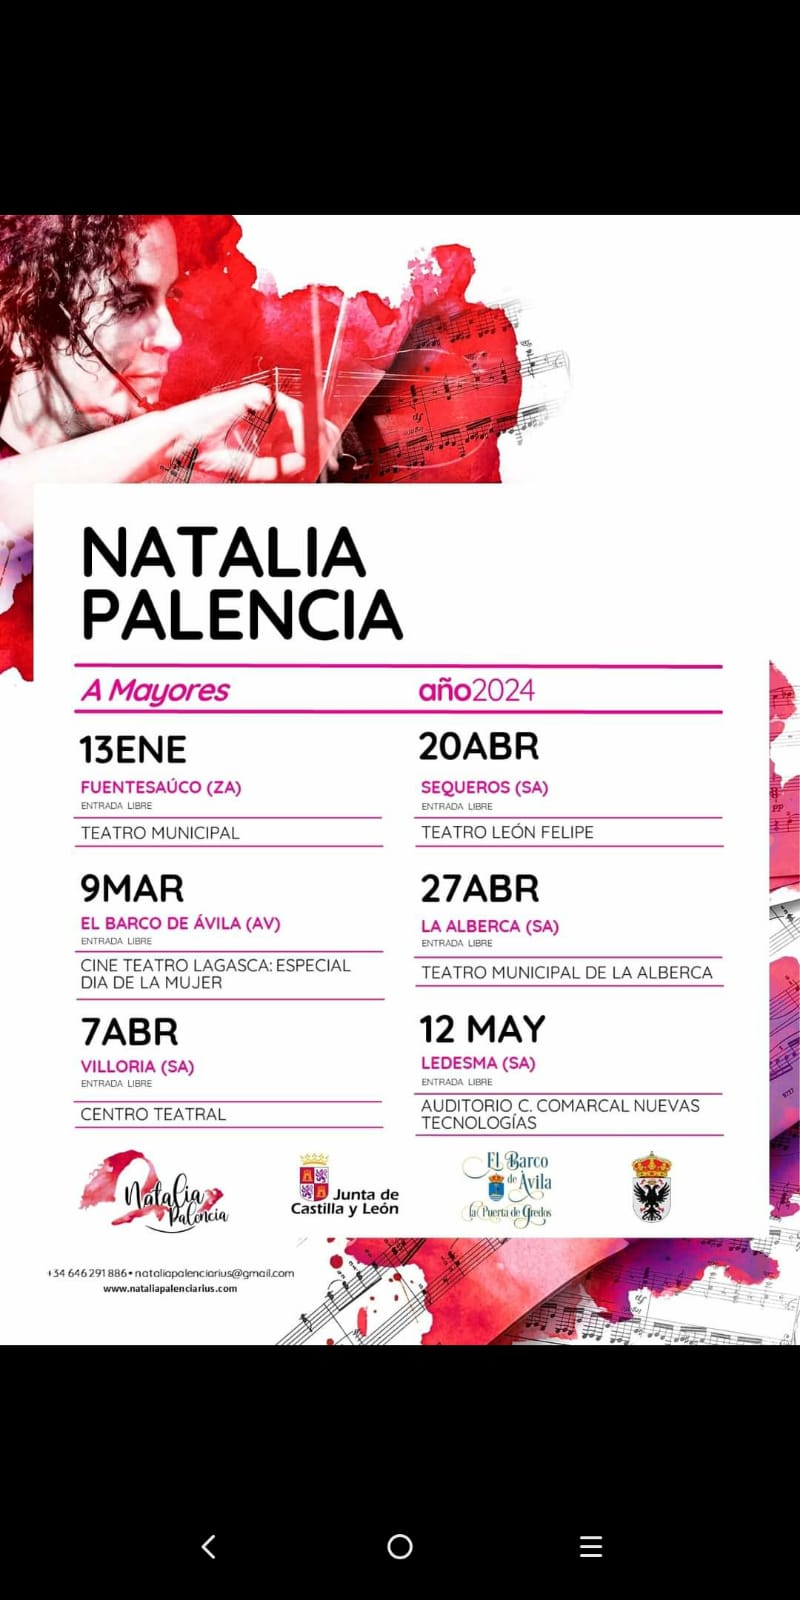 SEQUEROS / MUSICA - Natalia Palencia